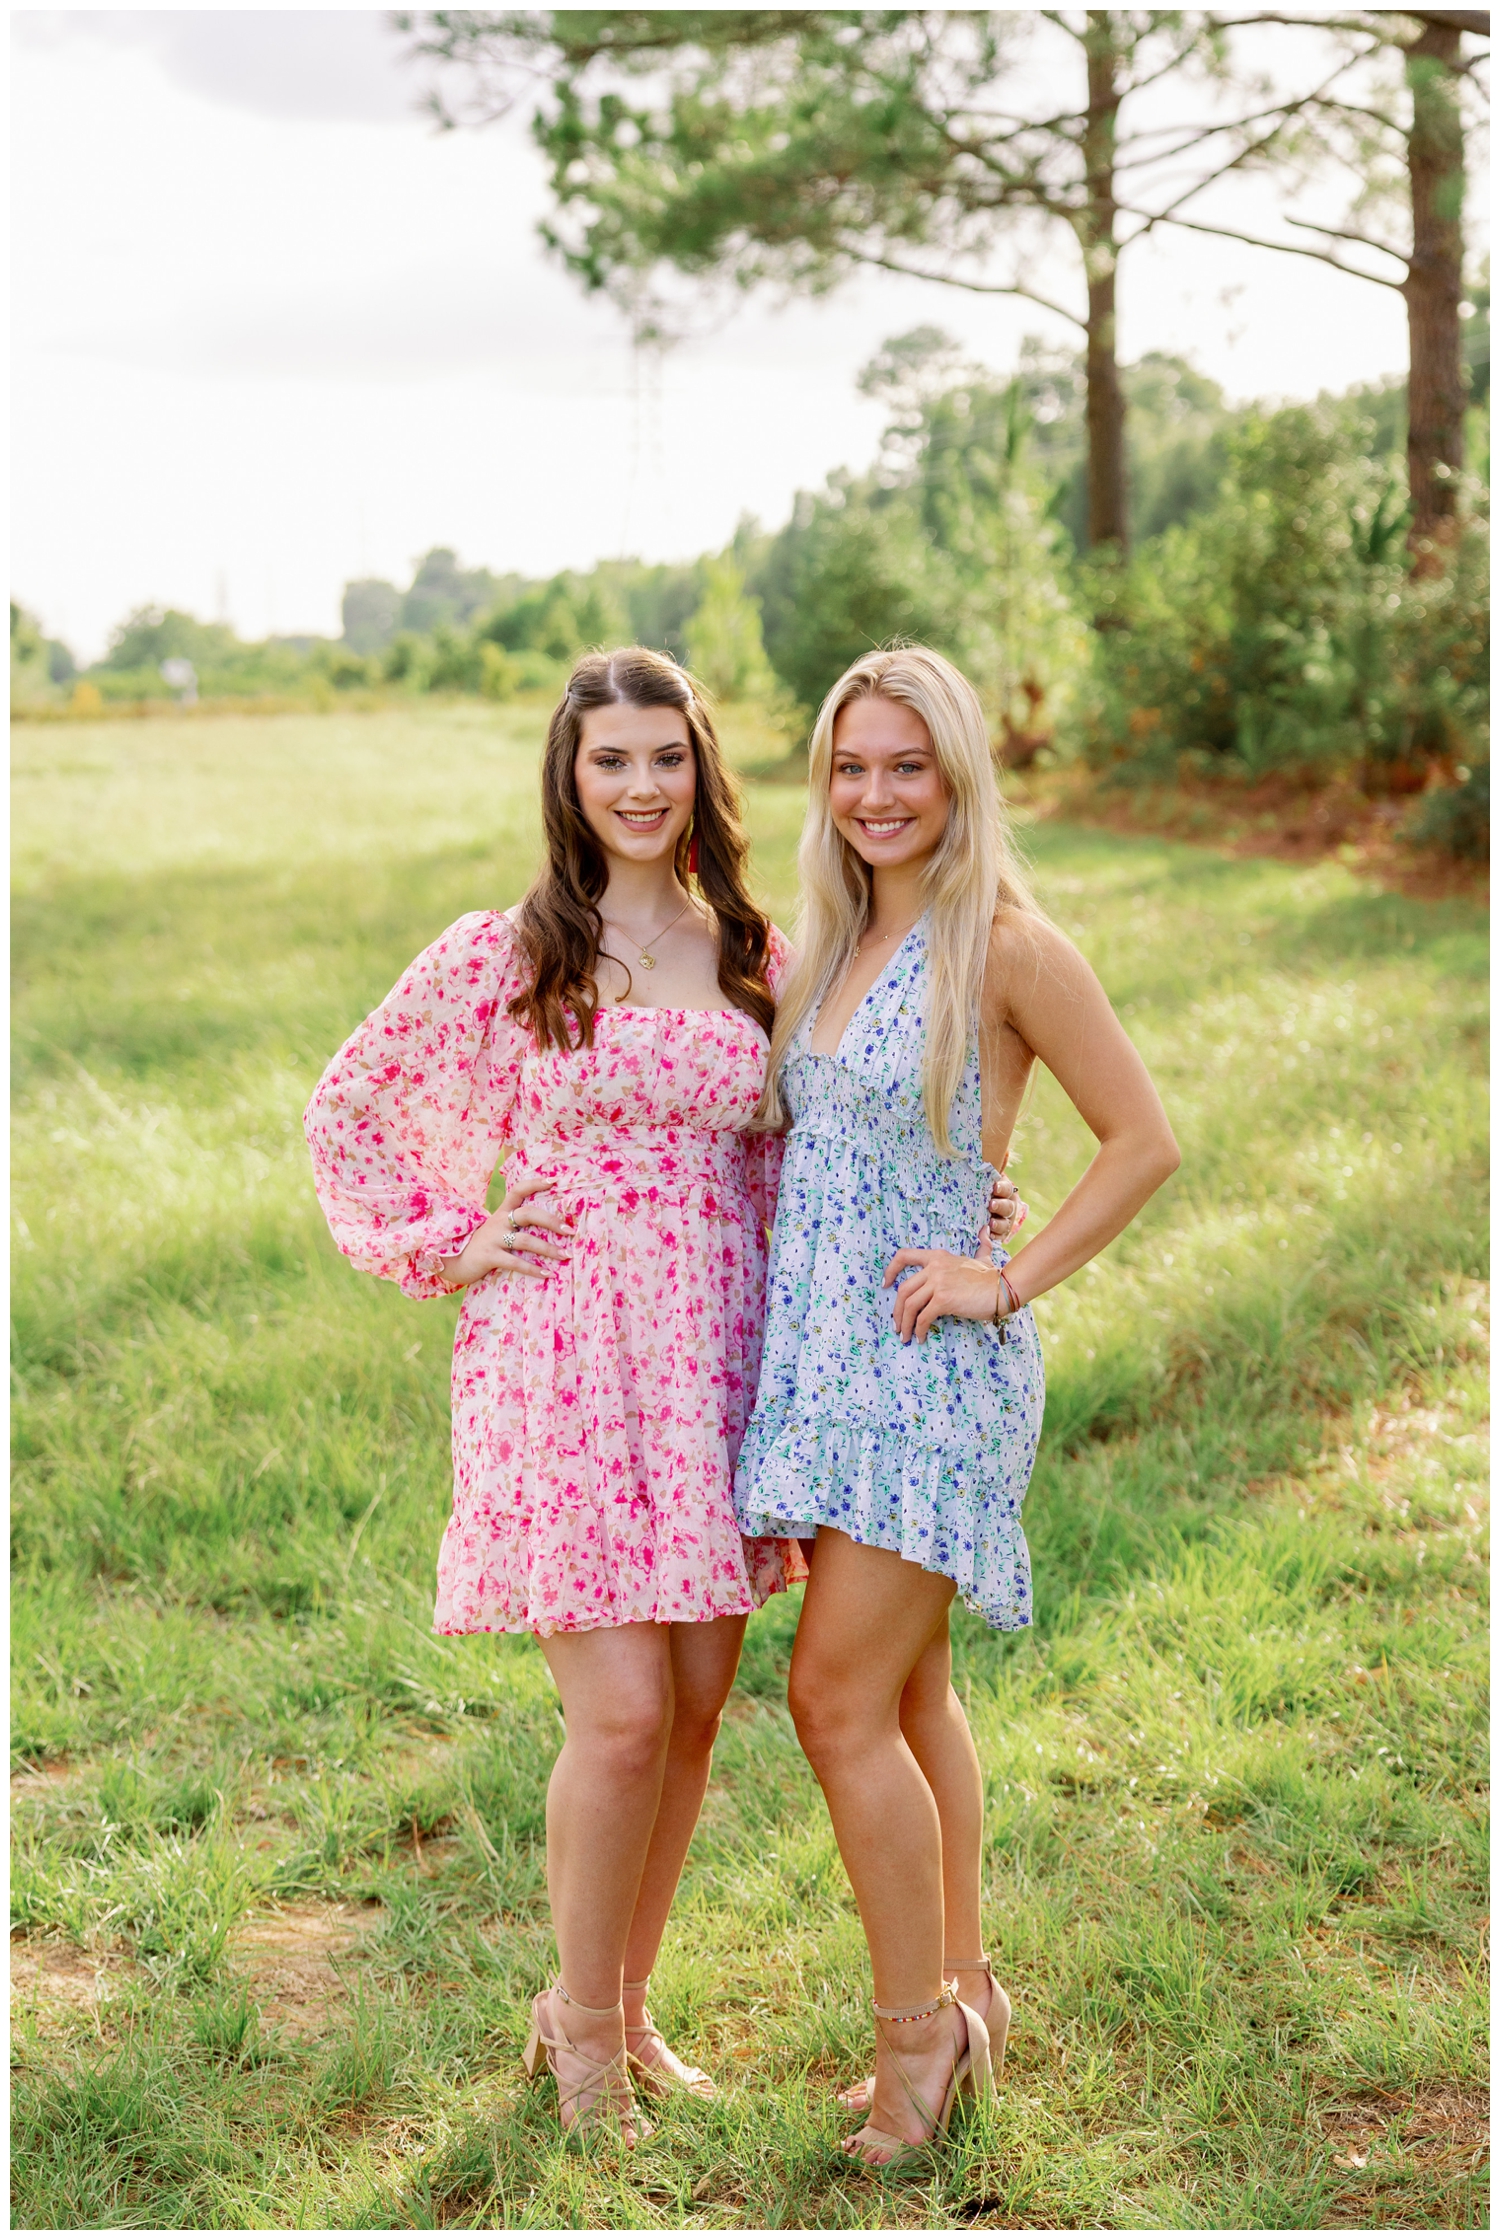 Dawson & Pearland High School Spokesmodel team portrait of two girls in sundresses